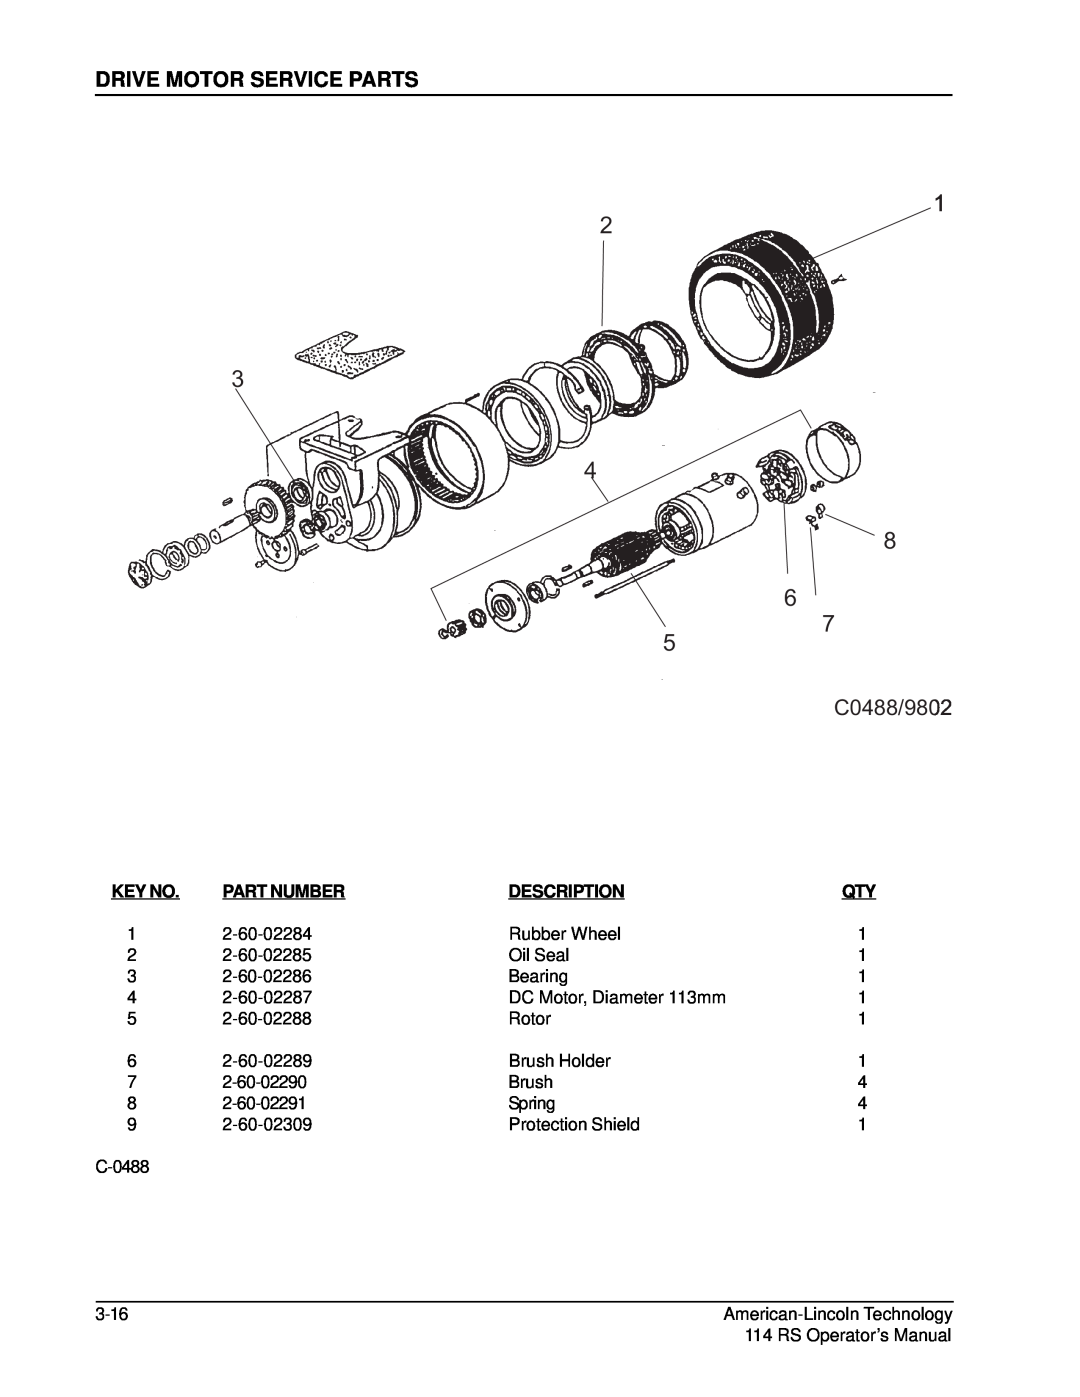 Nilfisk-ALTO 114RS SWEEPER manual Drive Motor Service Parts, C0488/9802, Part Number, Description 